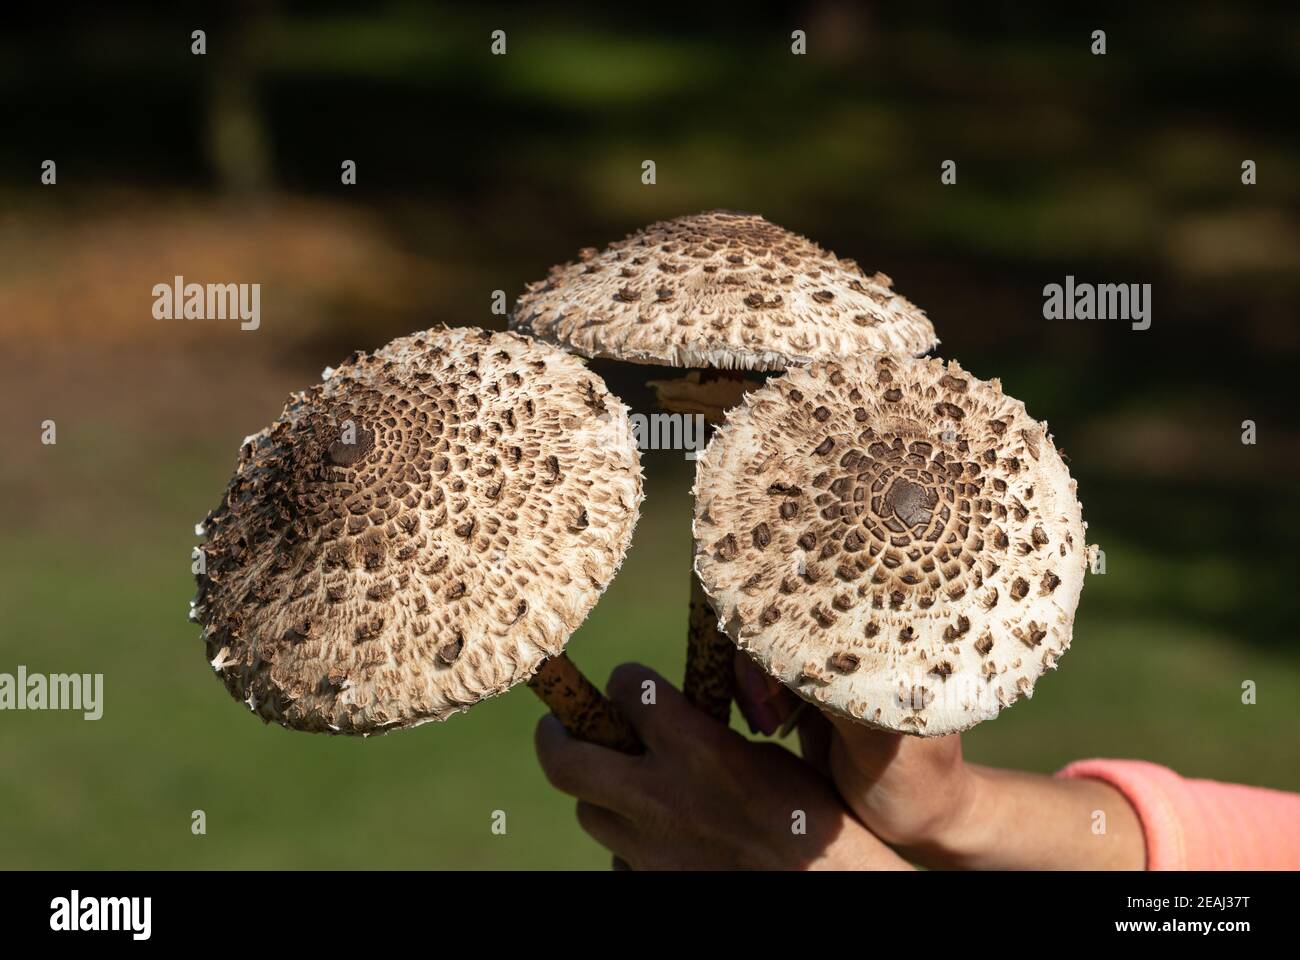 Ripe parasol mushroom in the mushroom picker's hand Stock Photo